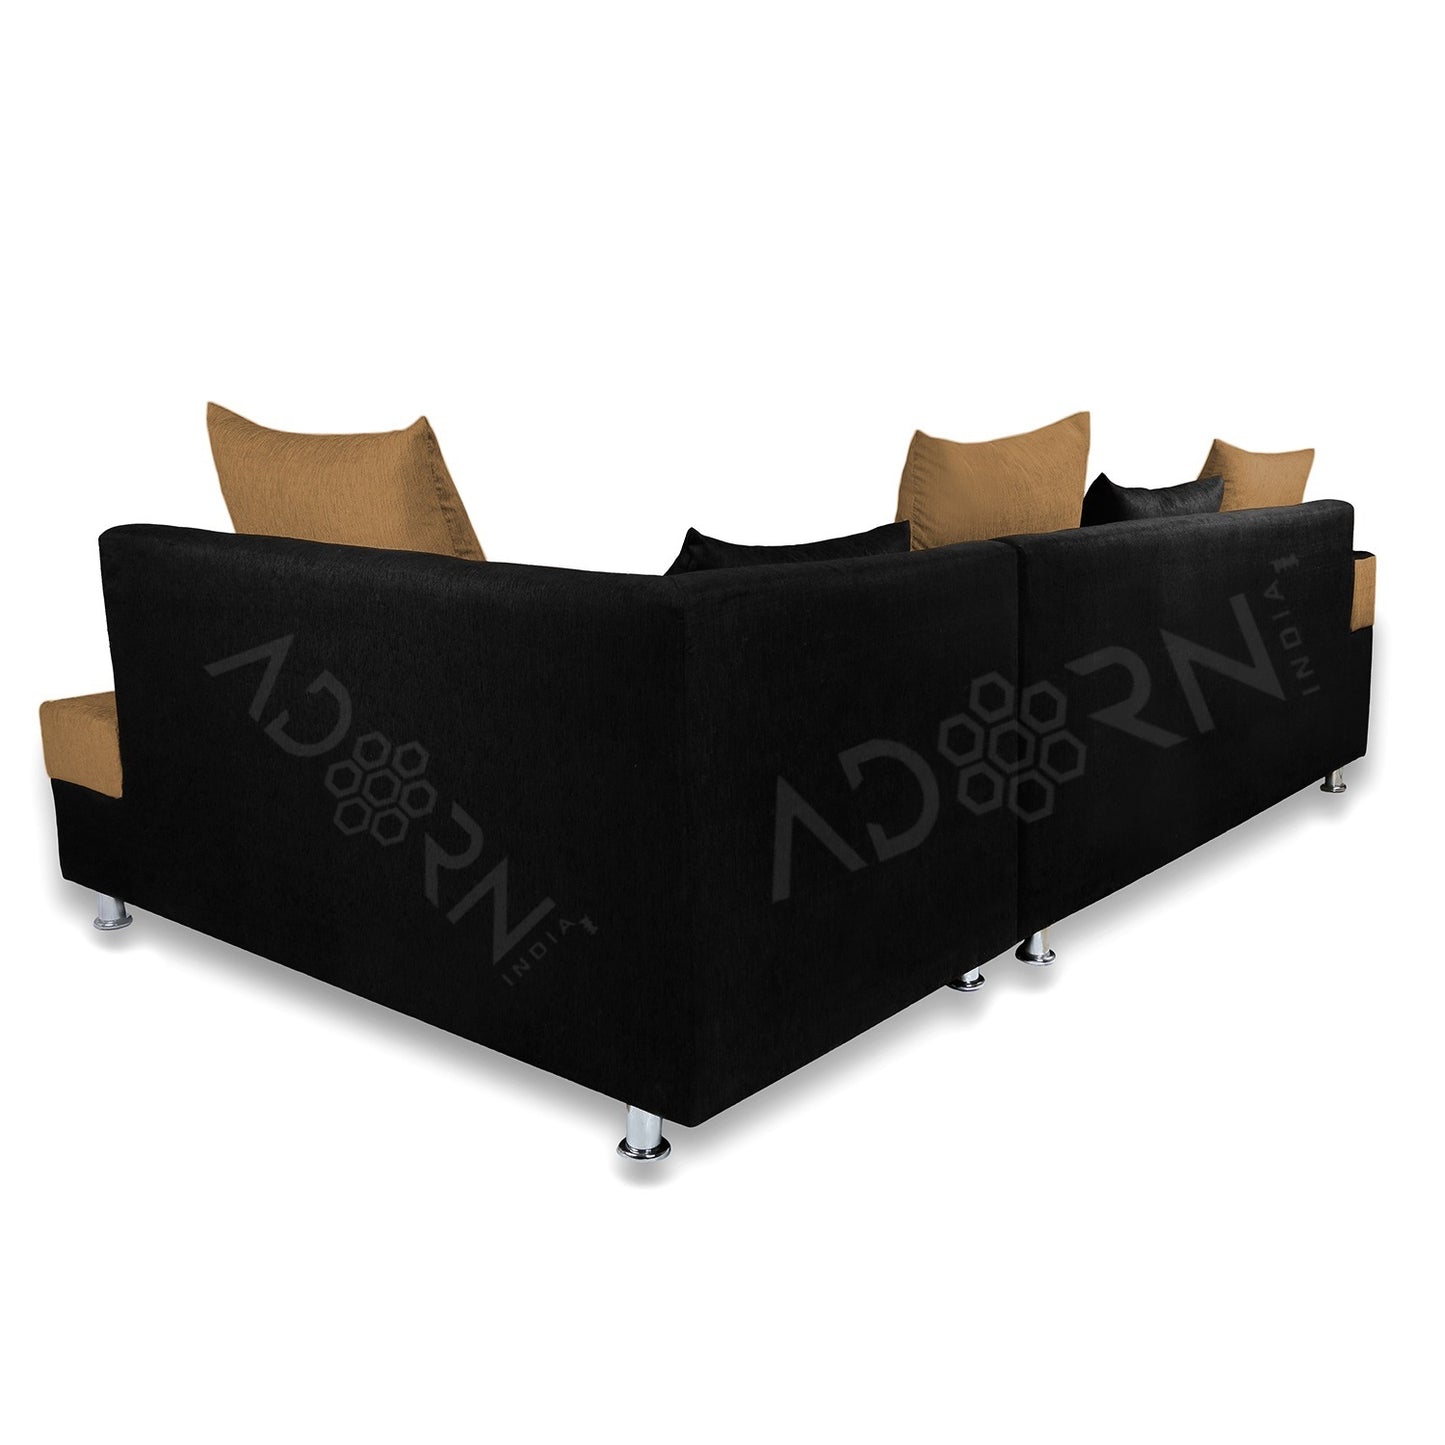 Adorn India Adillac 6 Seater Corner Sofa(Right Side)(Camel & Black)